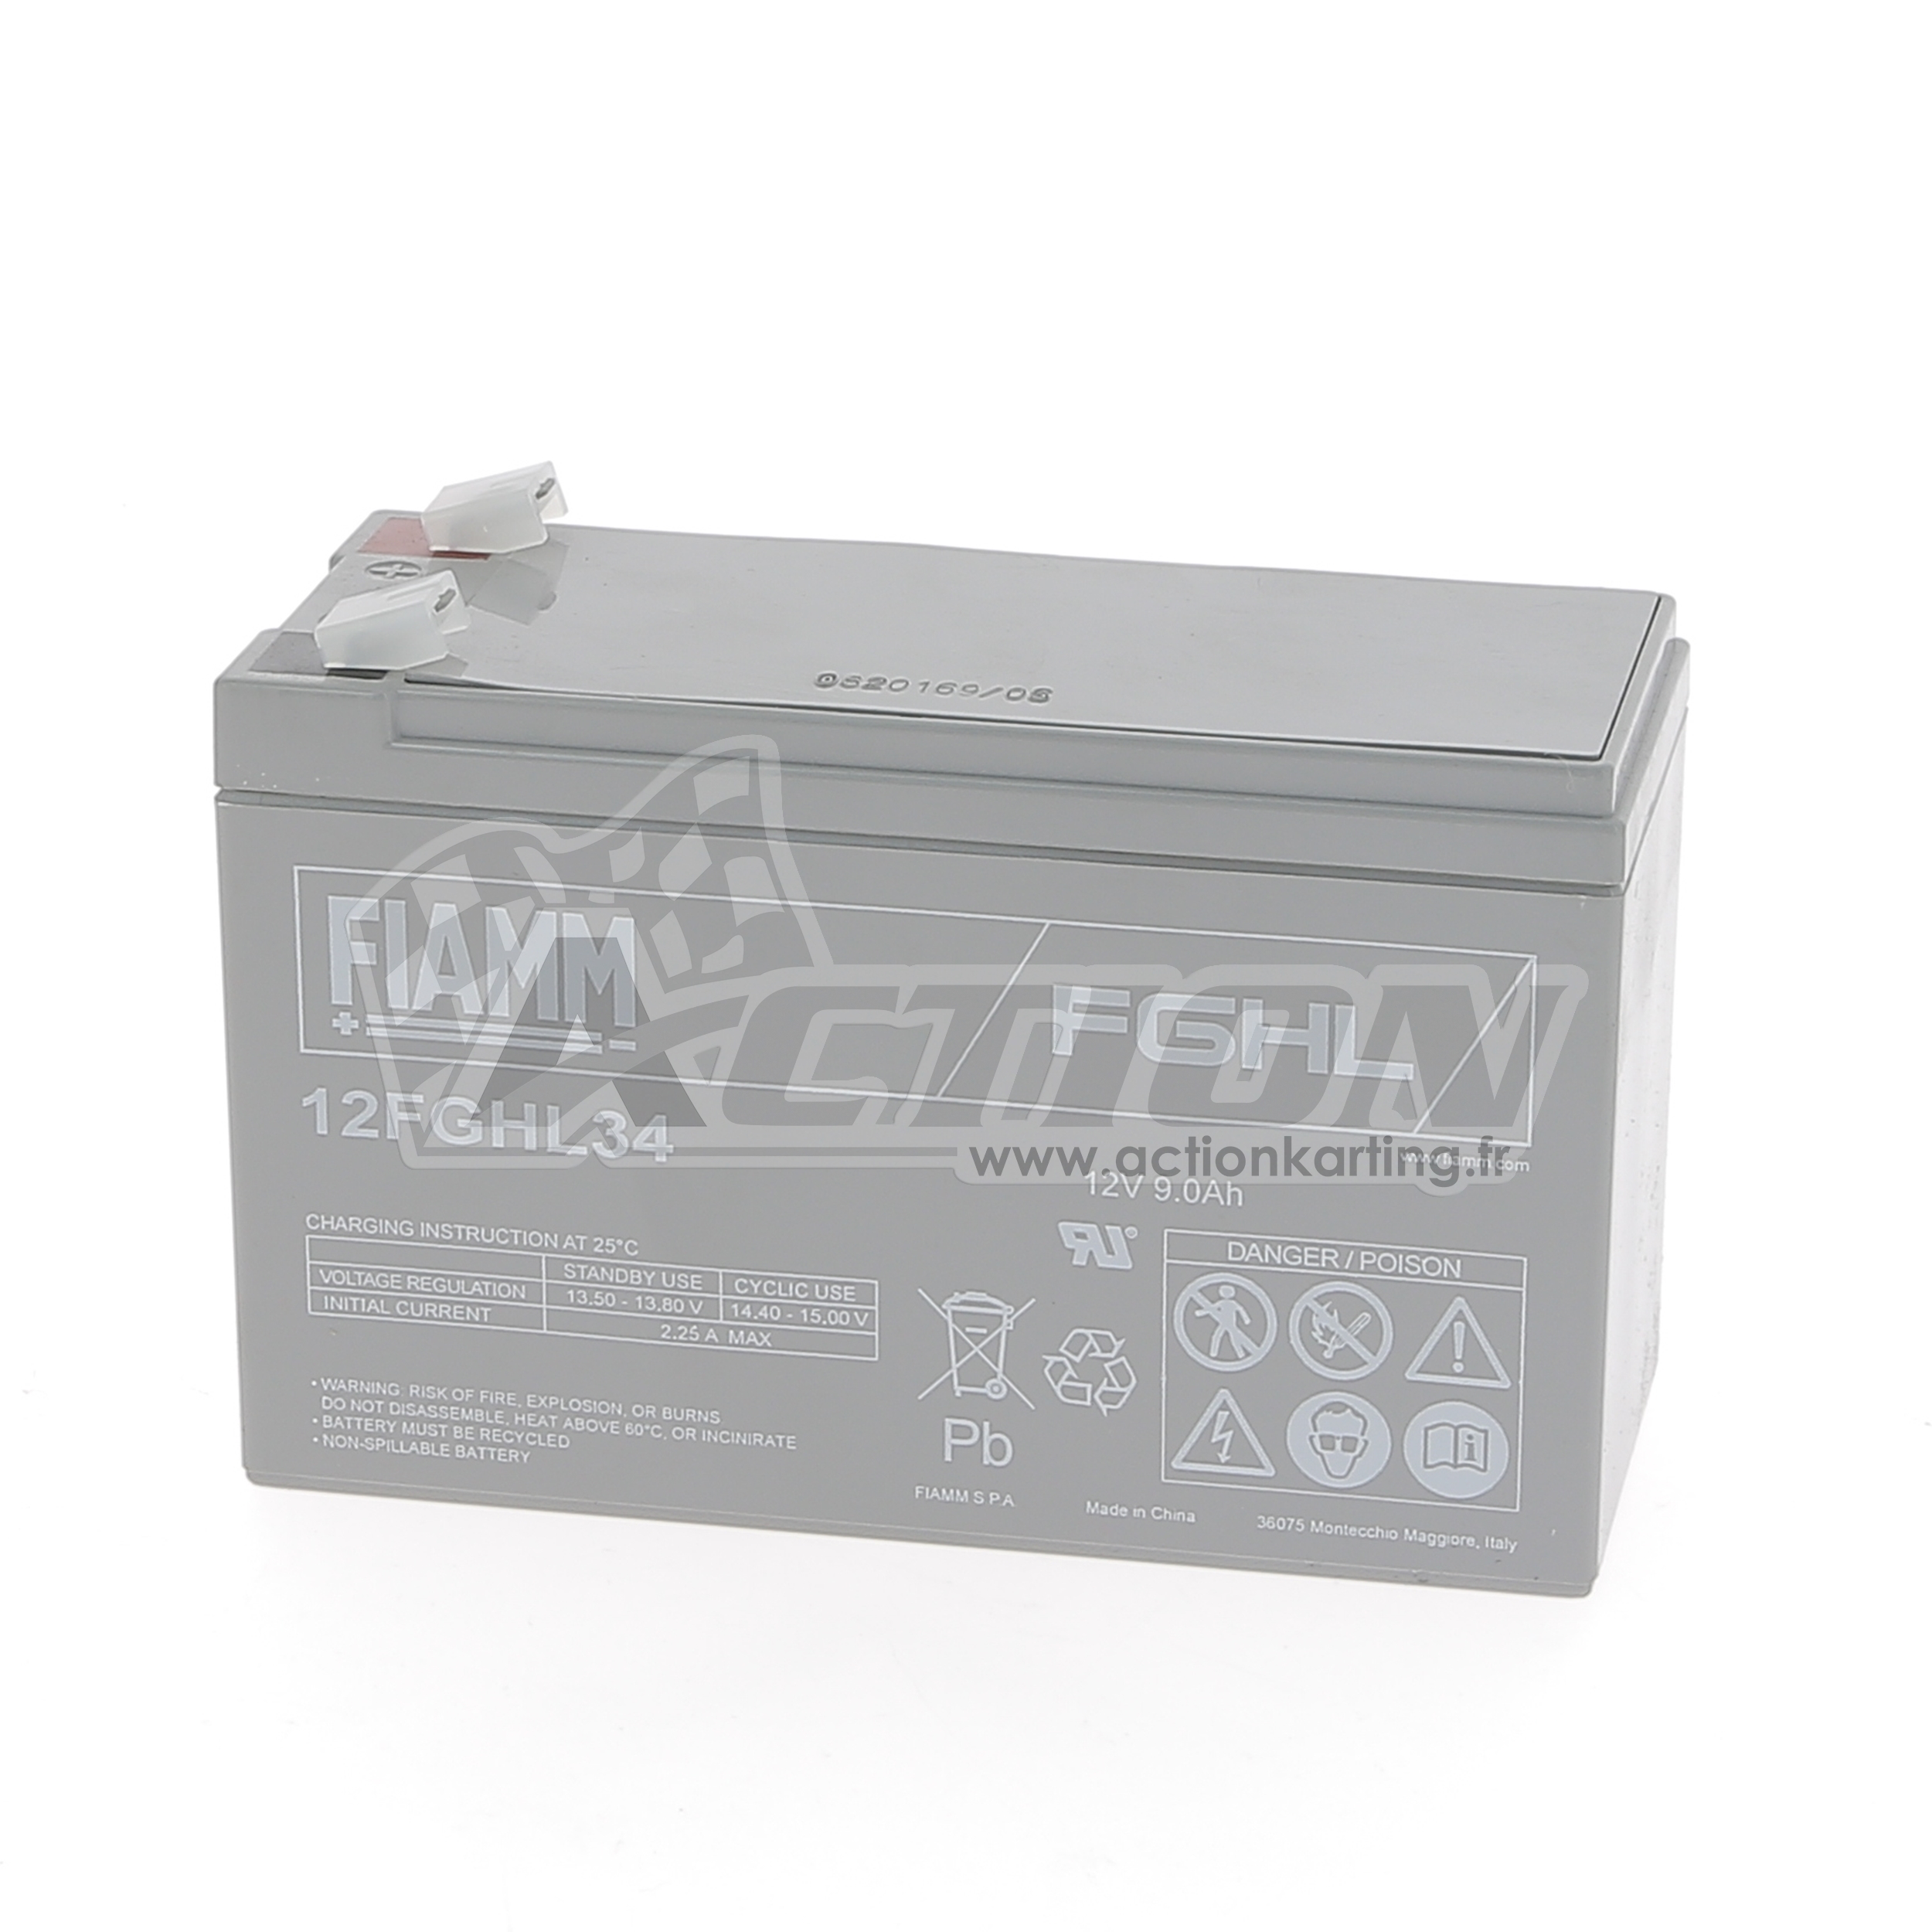 Batterie Lithium 12,8V W/Hr38,4 Leoch - Action karting - Accessoires moteurs